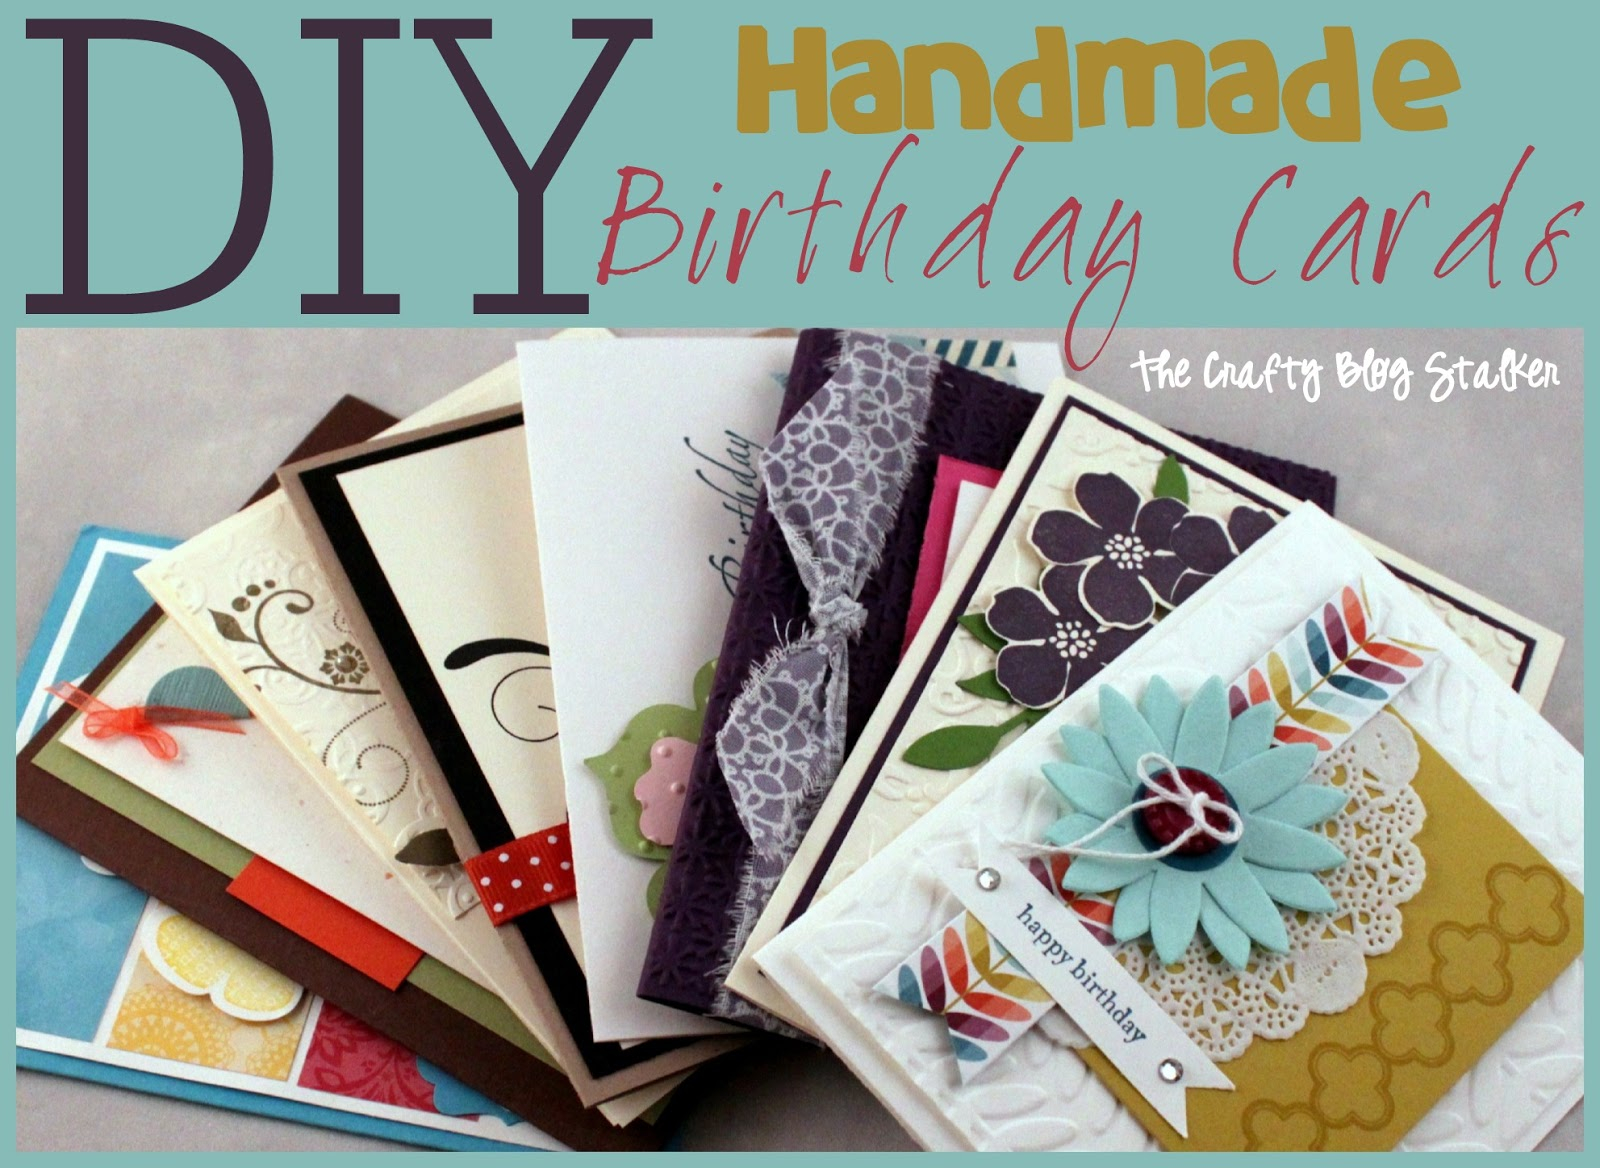 Easy Handmade Birthday Cards Ideas Handmade Birthday Card Ideas The Crafty Blog Stalker